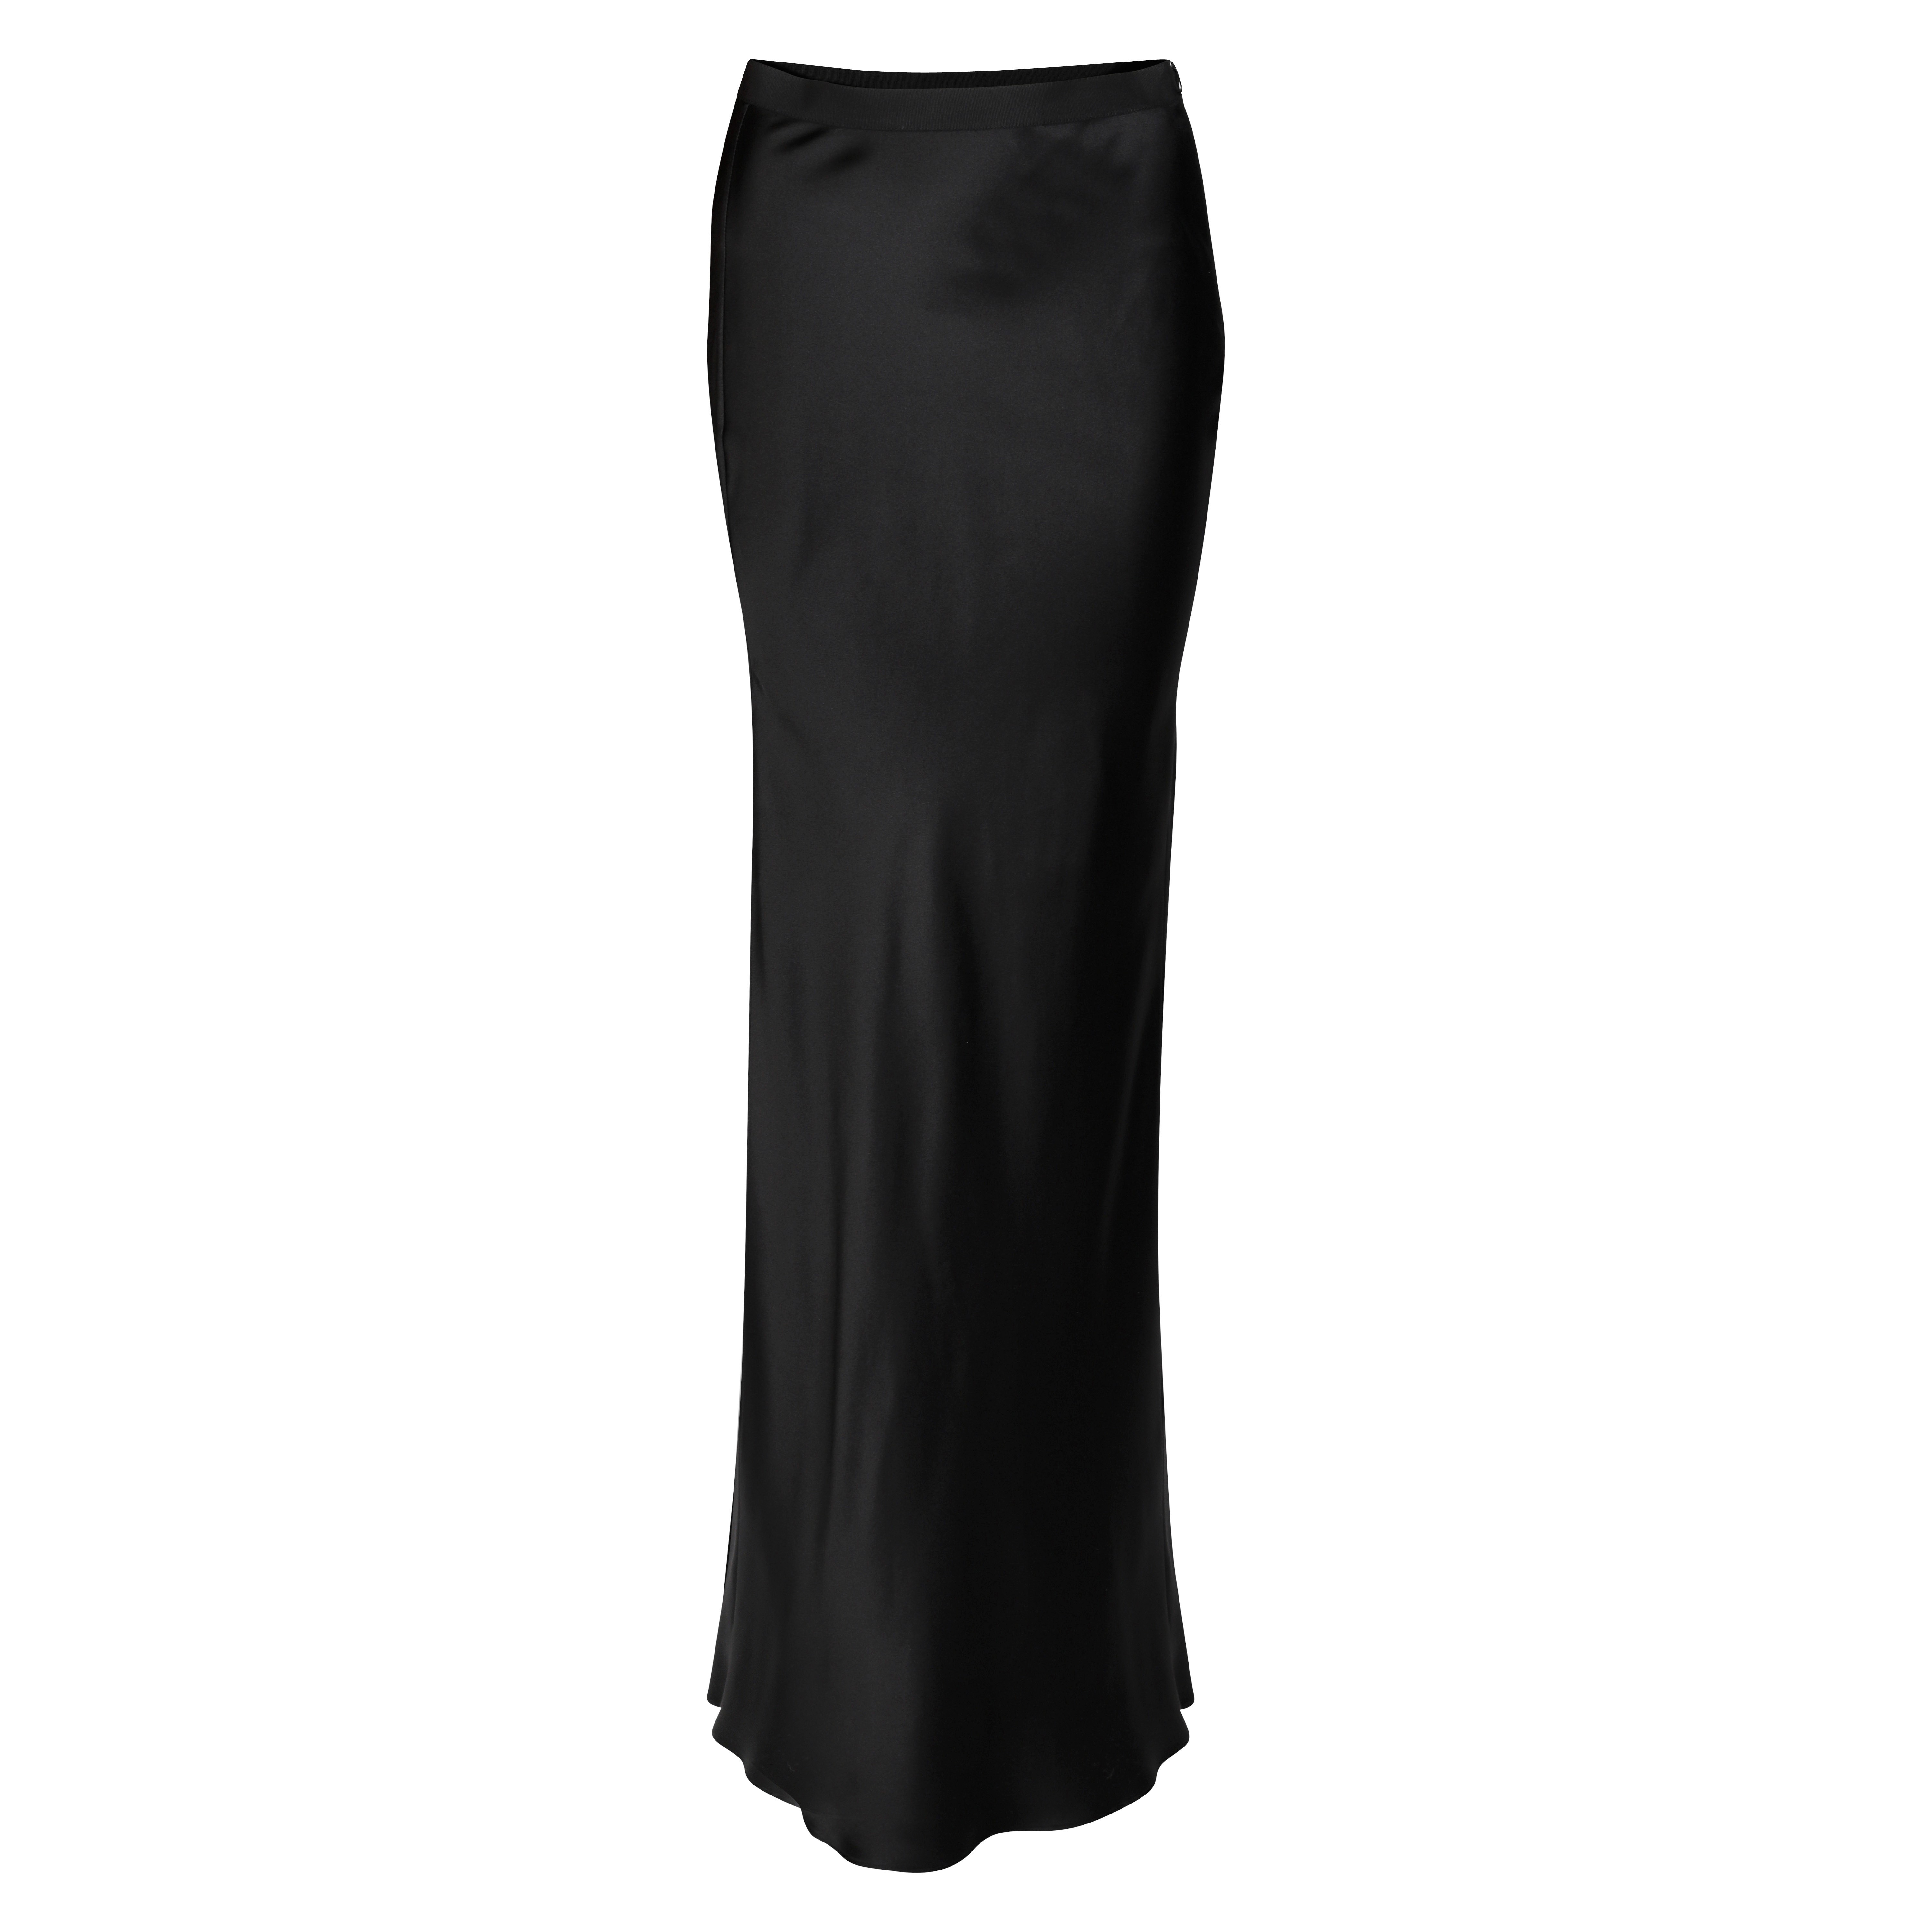 NILI LOTAN Azalea Skirt in Black Silk L - US6